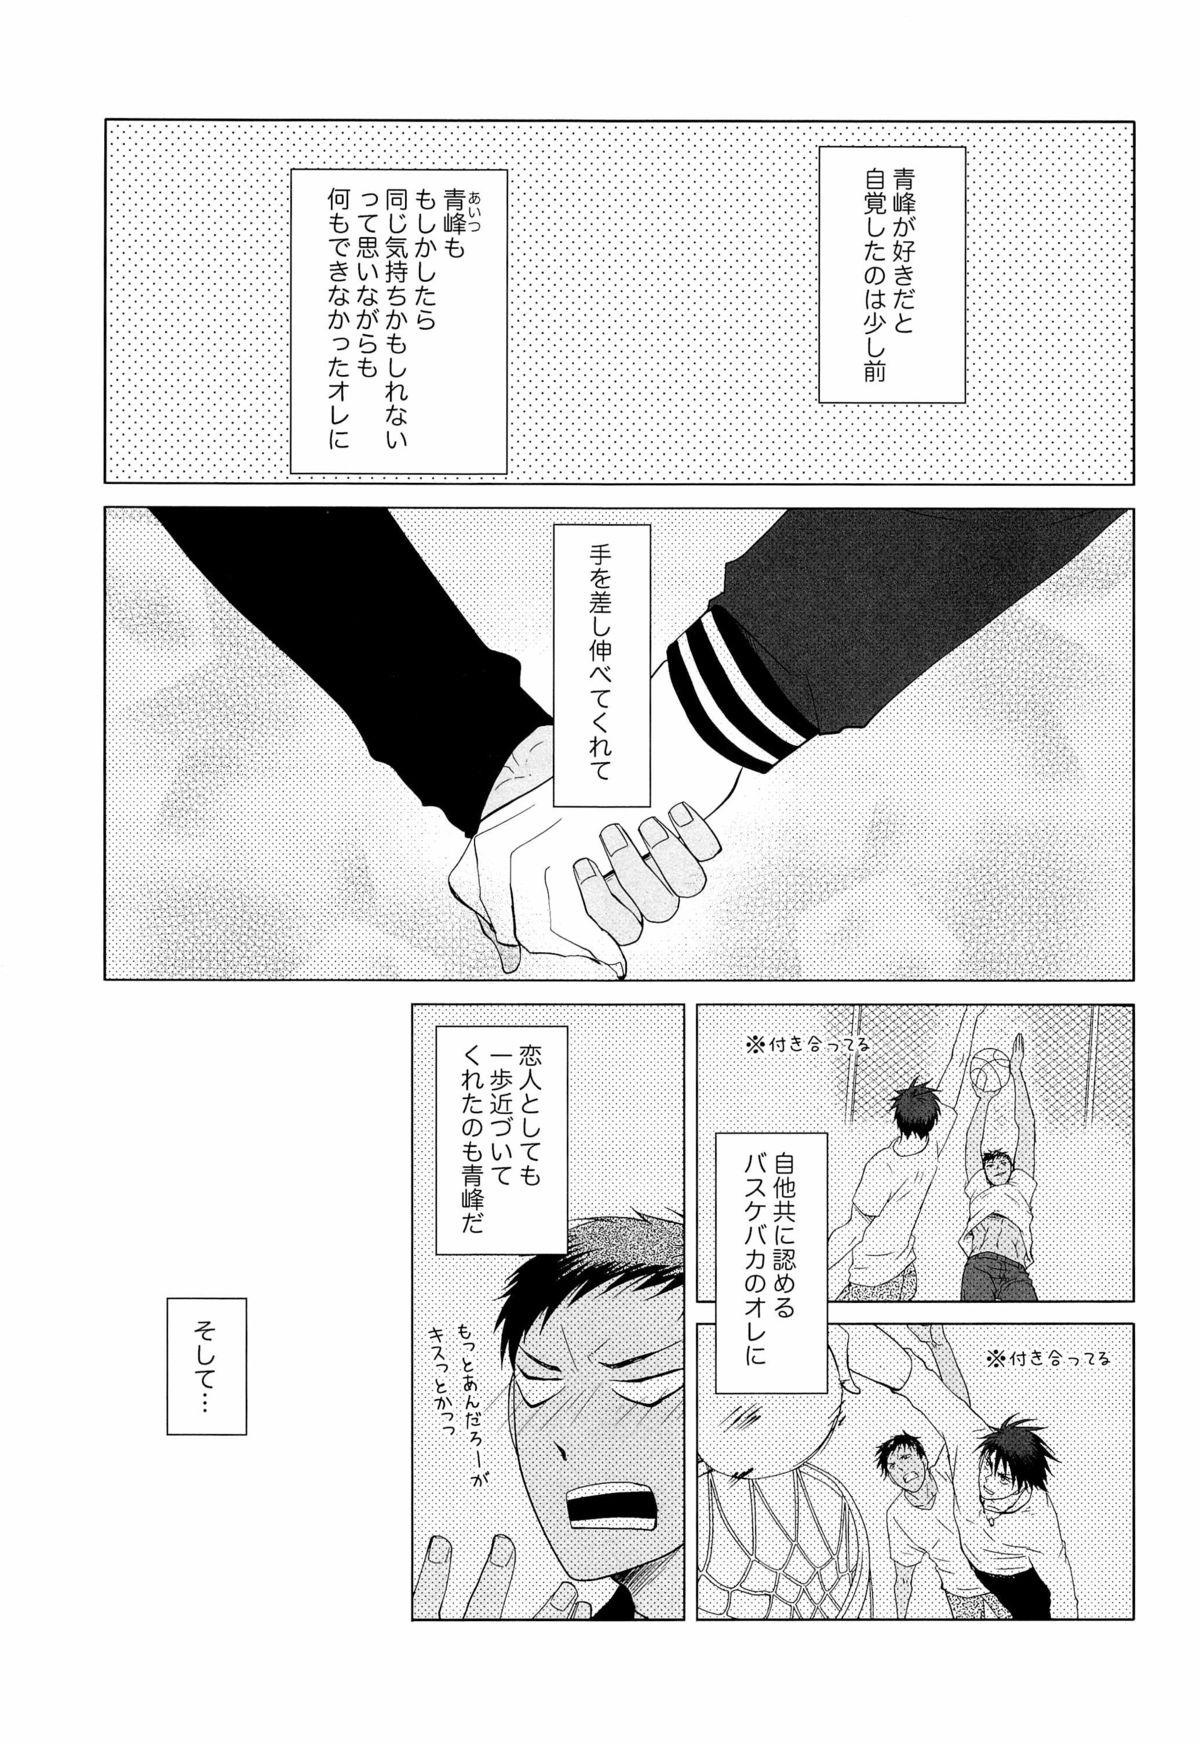 Sucking Dick あおみねと付き合ってる、ます。 - Kuroko no basuke Footworship - Page 5